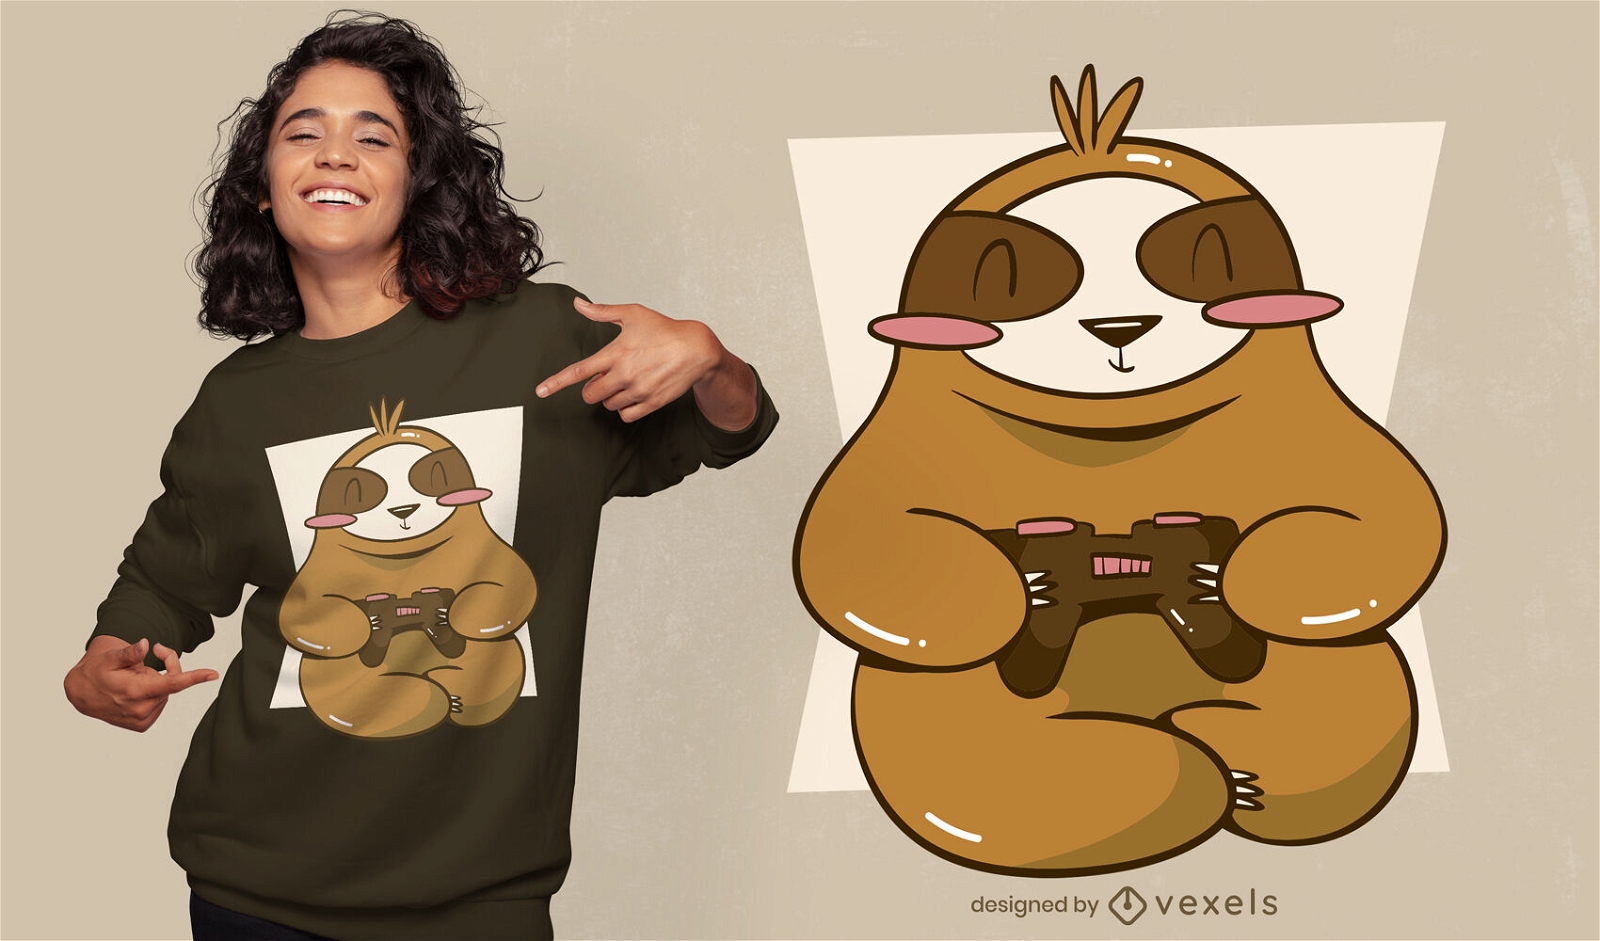 Gamer sloth with joystick t-shirt design